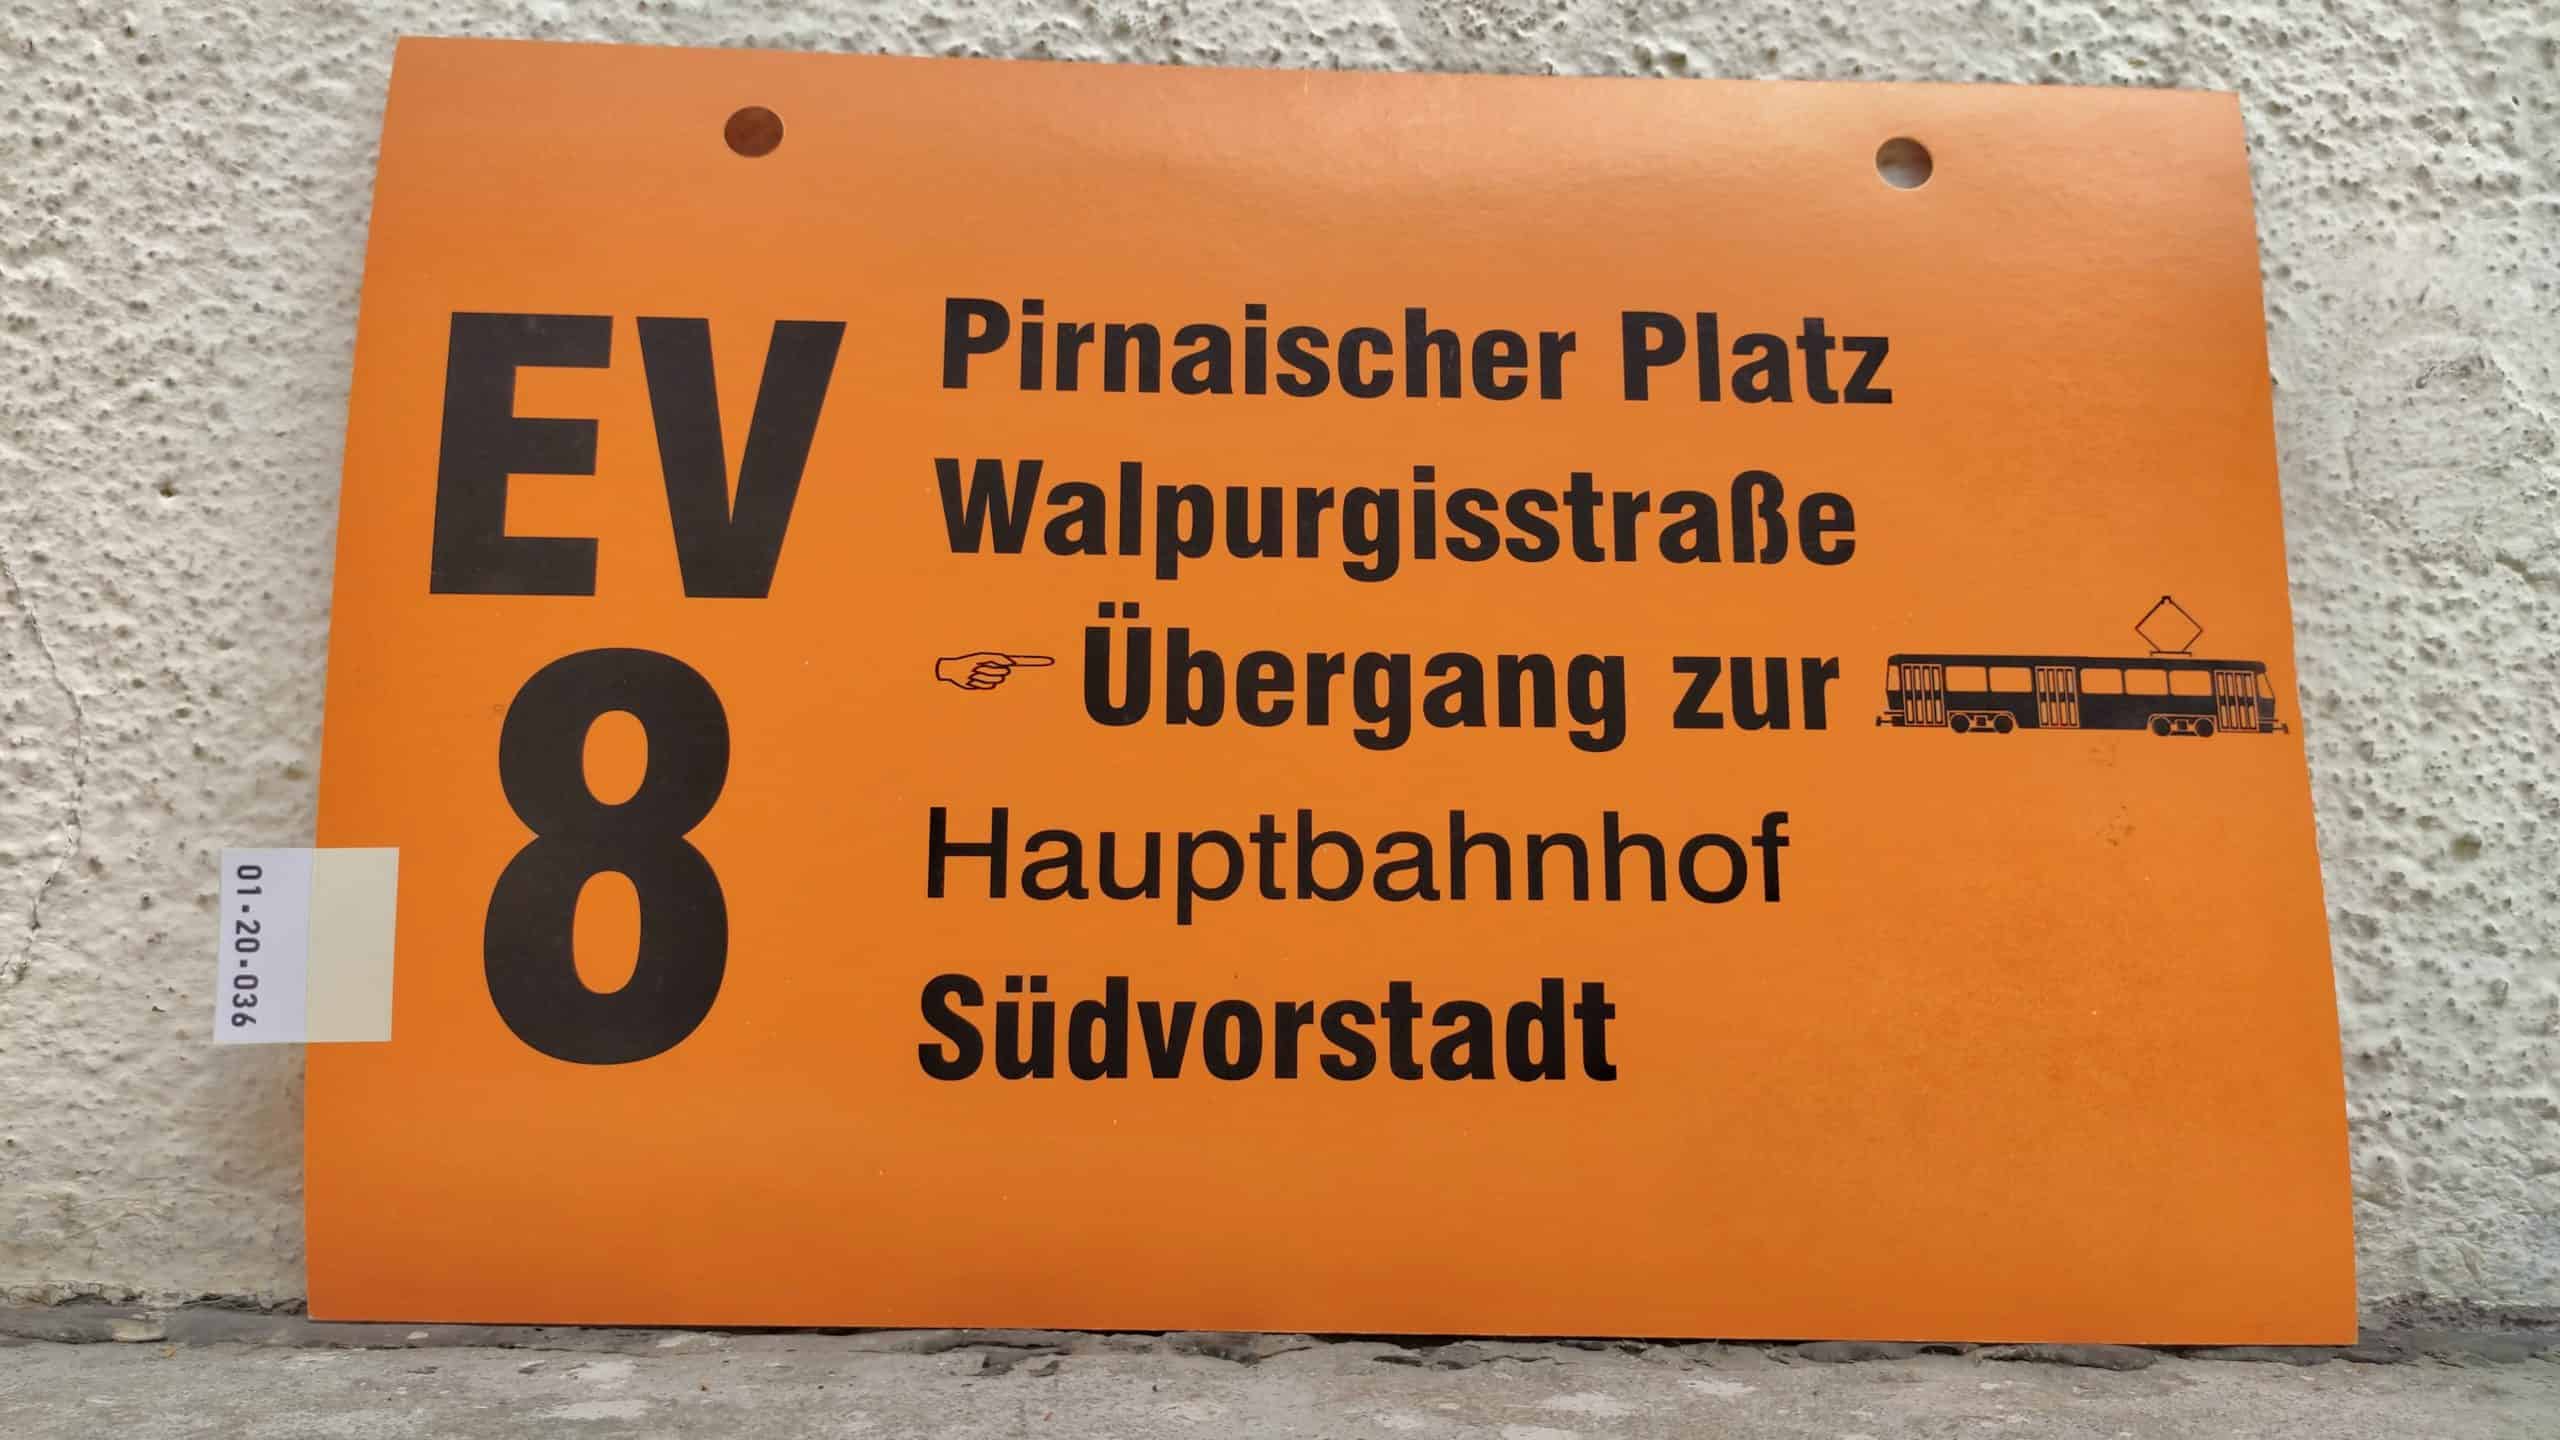 EV 8 Pirnaischer Platz – Südvorstadt